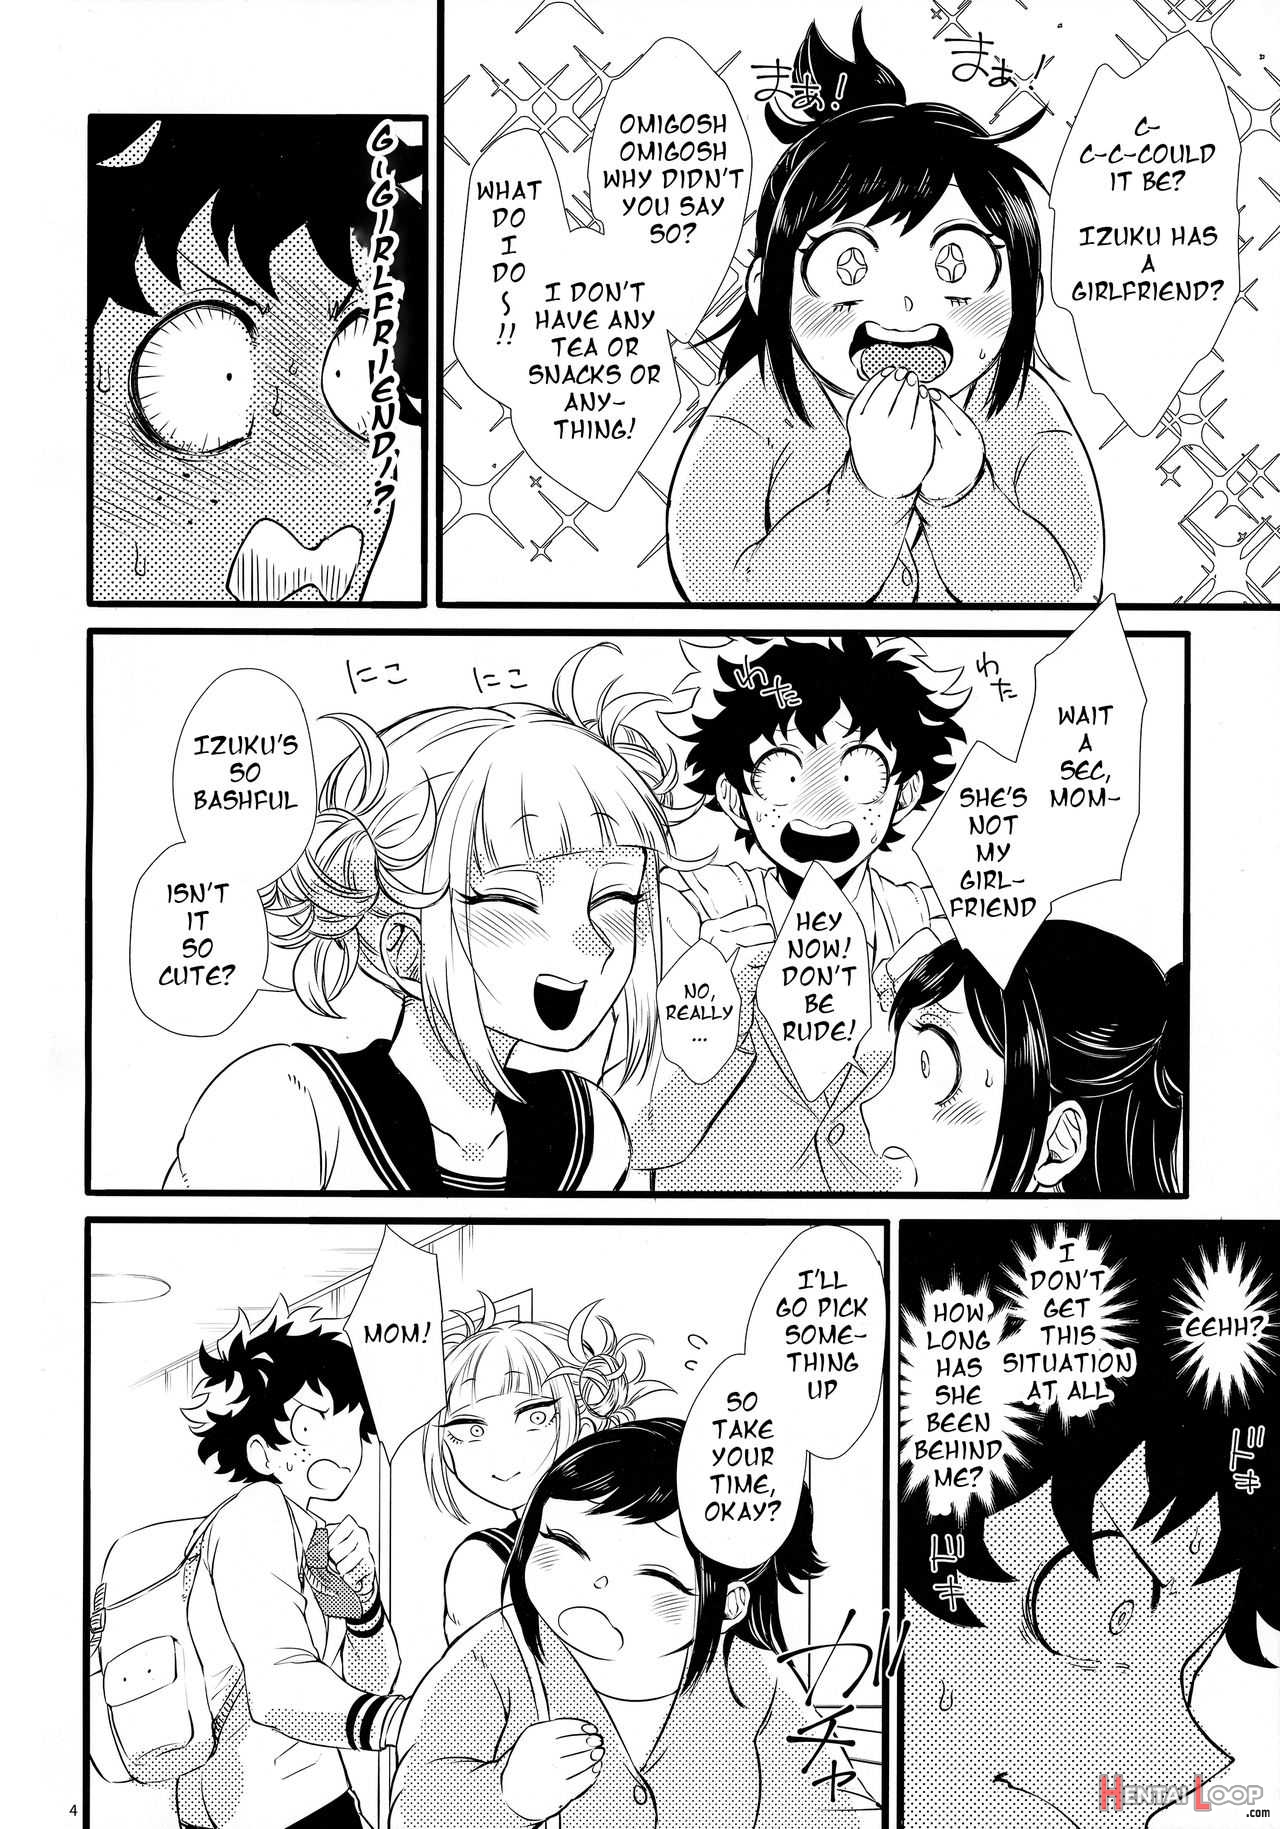 Togakun page 3